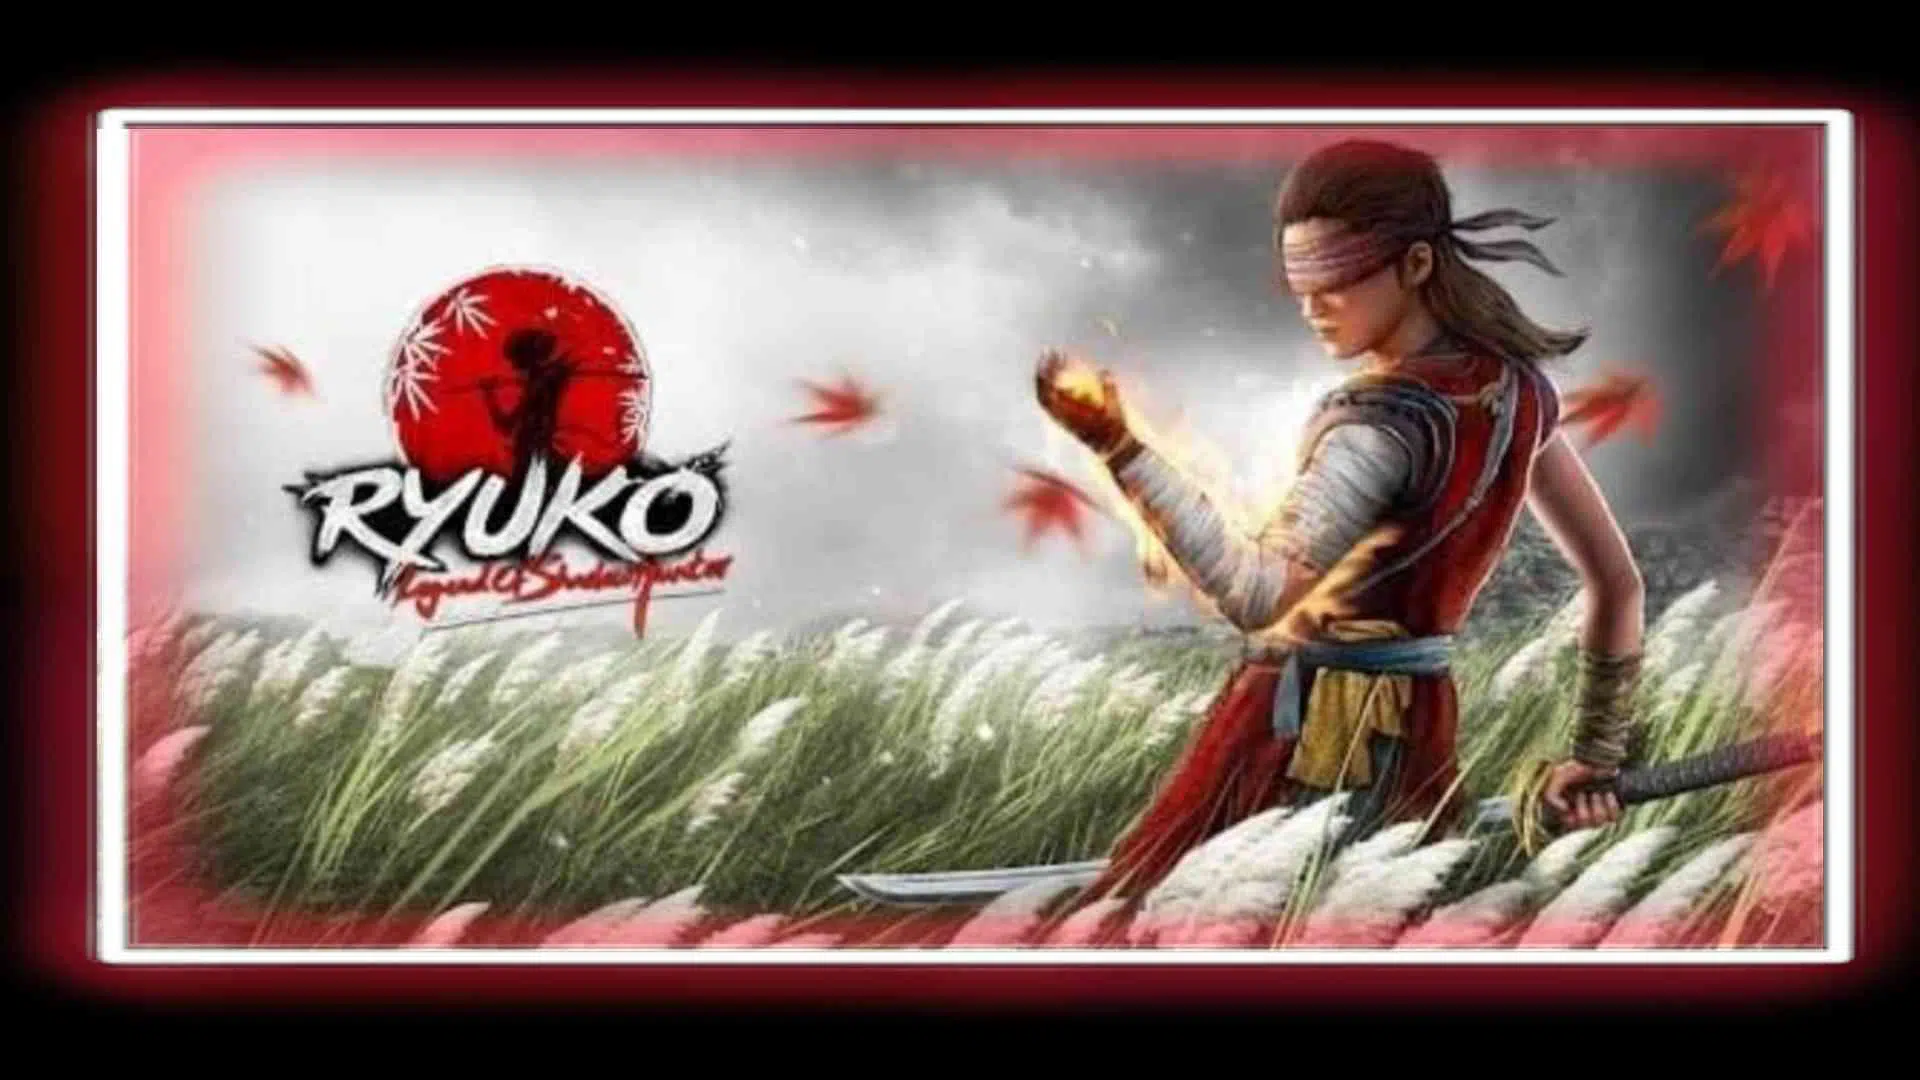 تحميل لعبة Ryuko Legend of Shadow برابط مباشر للهواتف